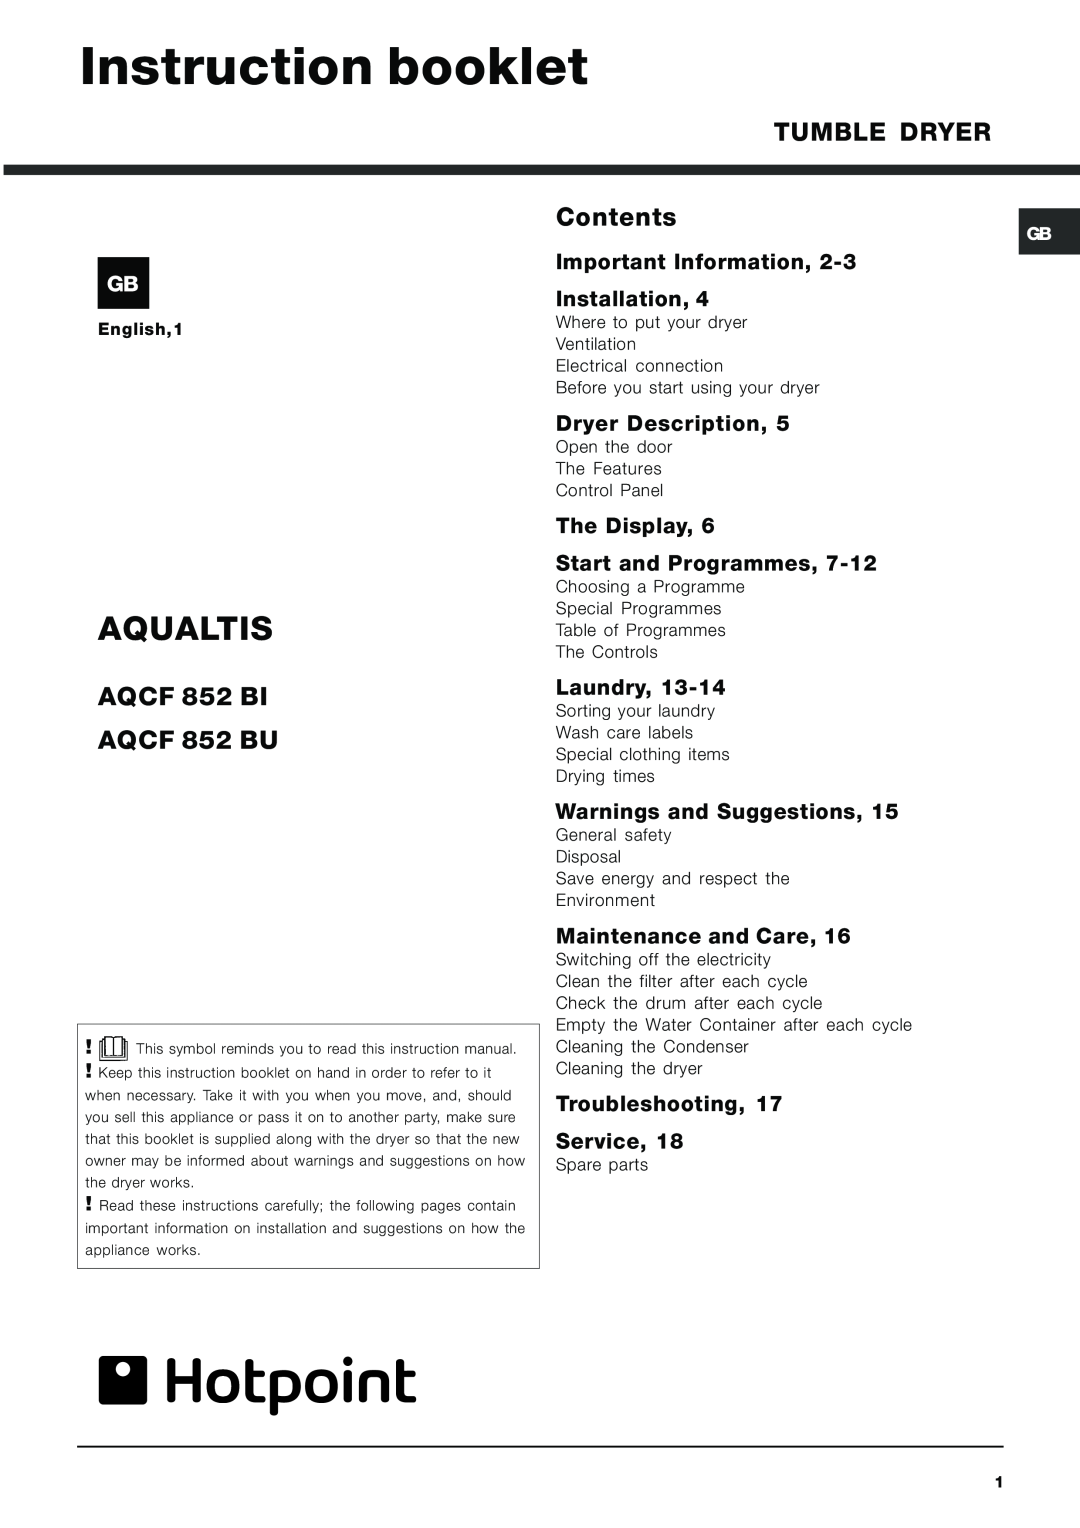 Hotpoint AQCF 852 BI instruction manual Instruction booklet, Aqualtis, Important Information Installation, Laundry 